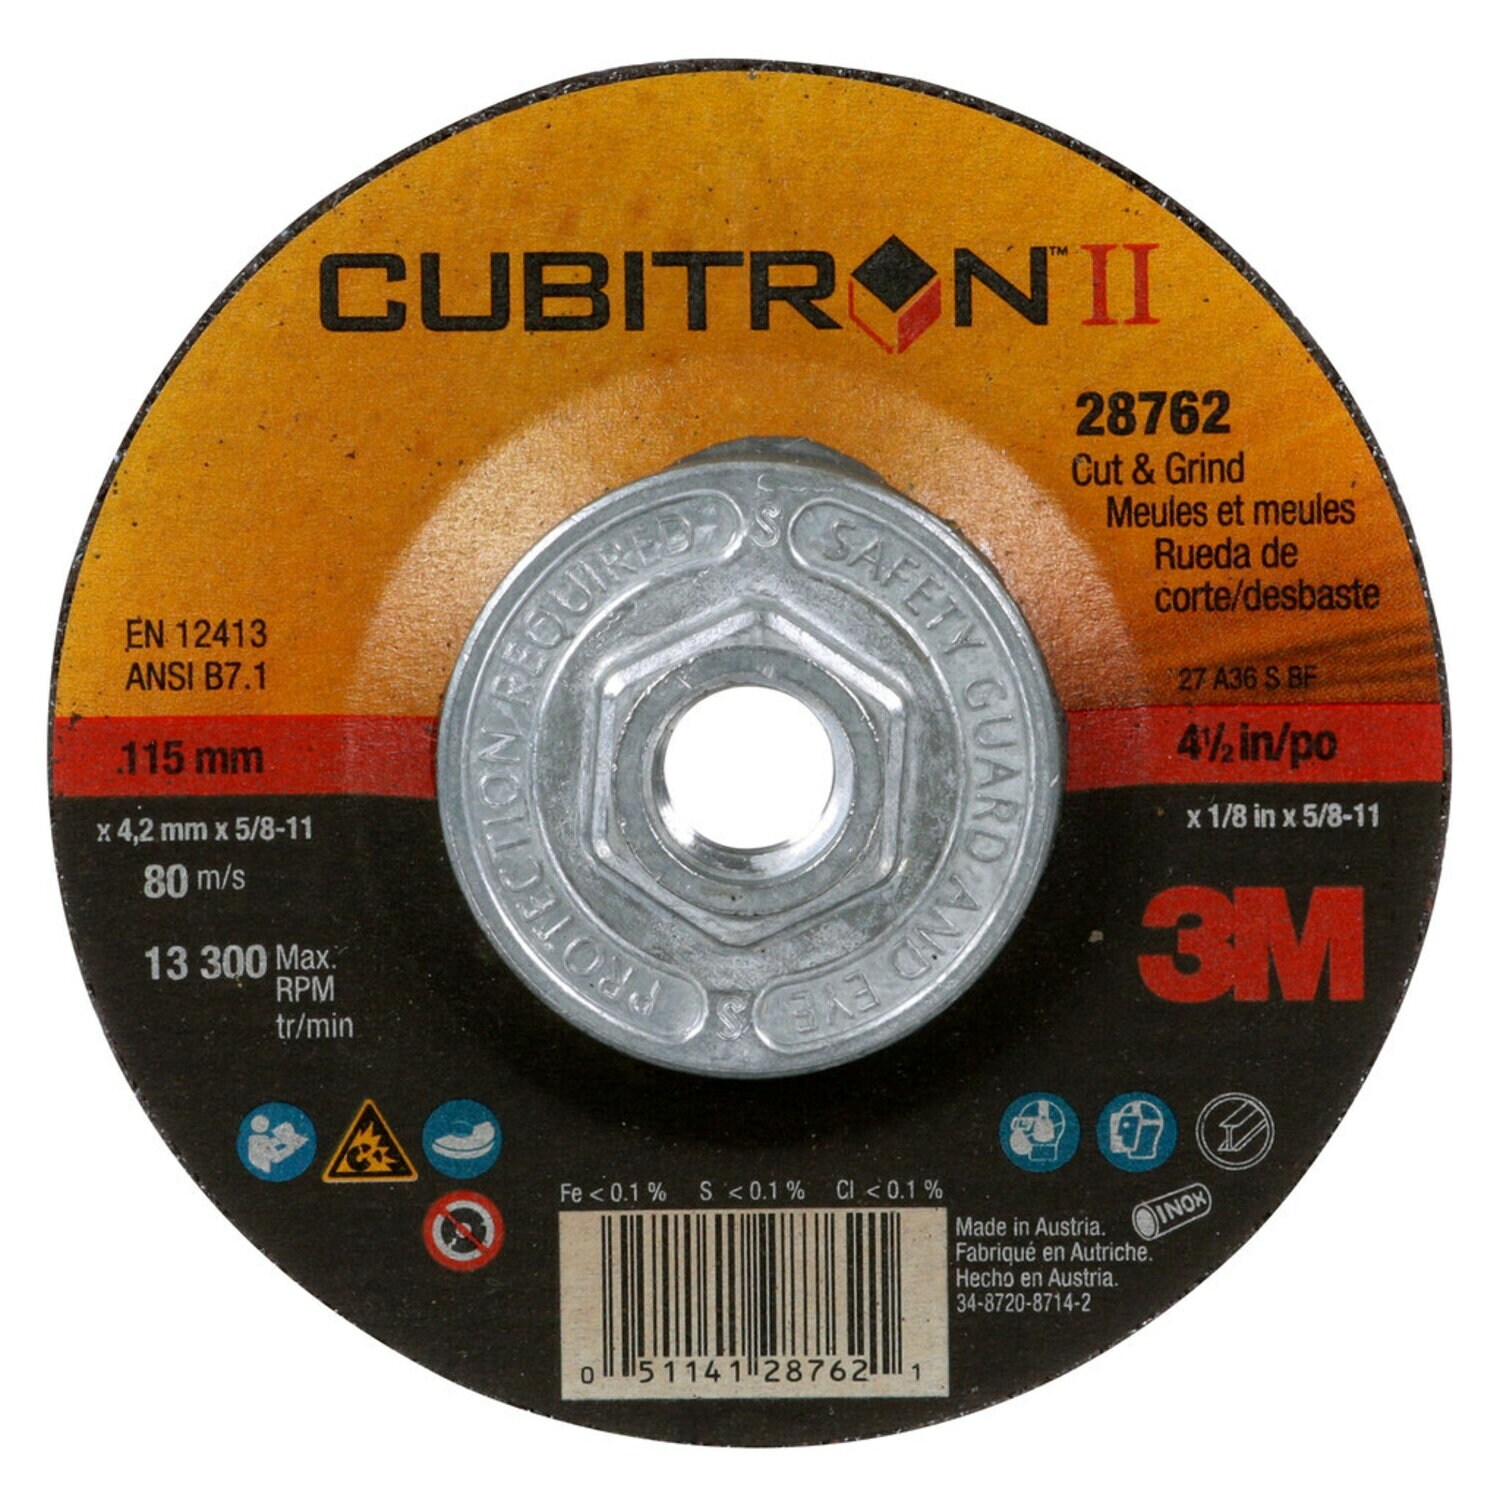 7100245018 - 3M Cubitron II Cut and Grind Wheel, 28762, T27 Quick Change, 4 1/2 in
x 1/8 in x 5/8 in-11 in, 10/Carton, 20 ea/Case